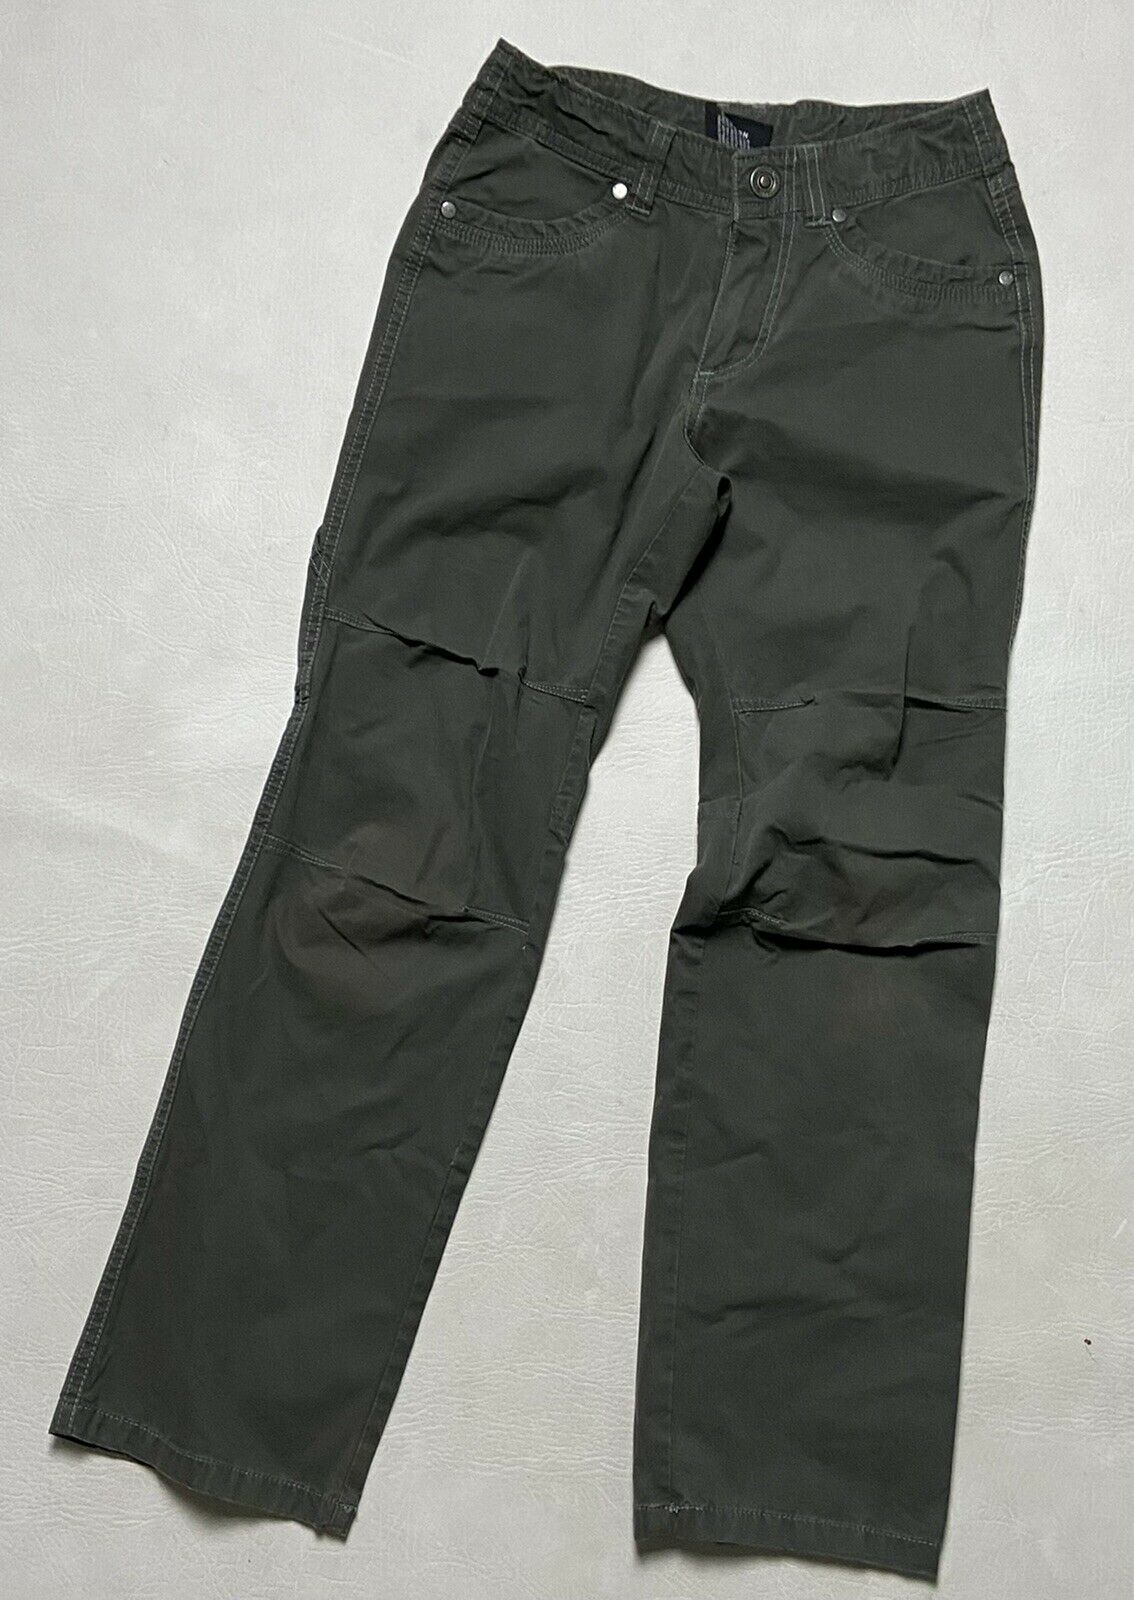 Kuhl Kid's Dark Grey Cargo Hiking Adjustable Waist Pants, Size S (7-8)